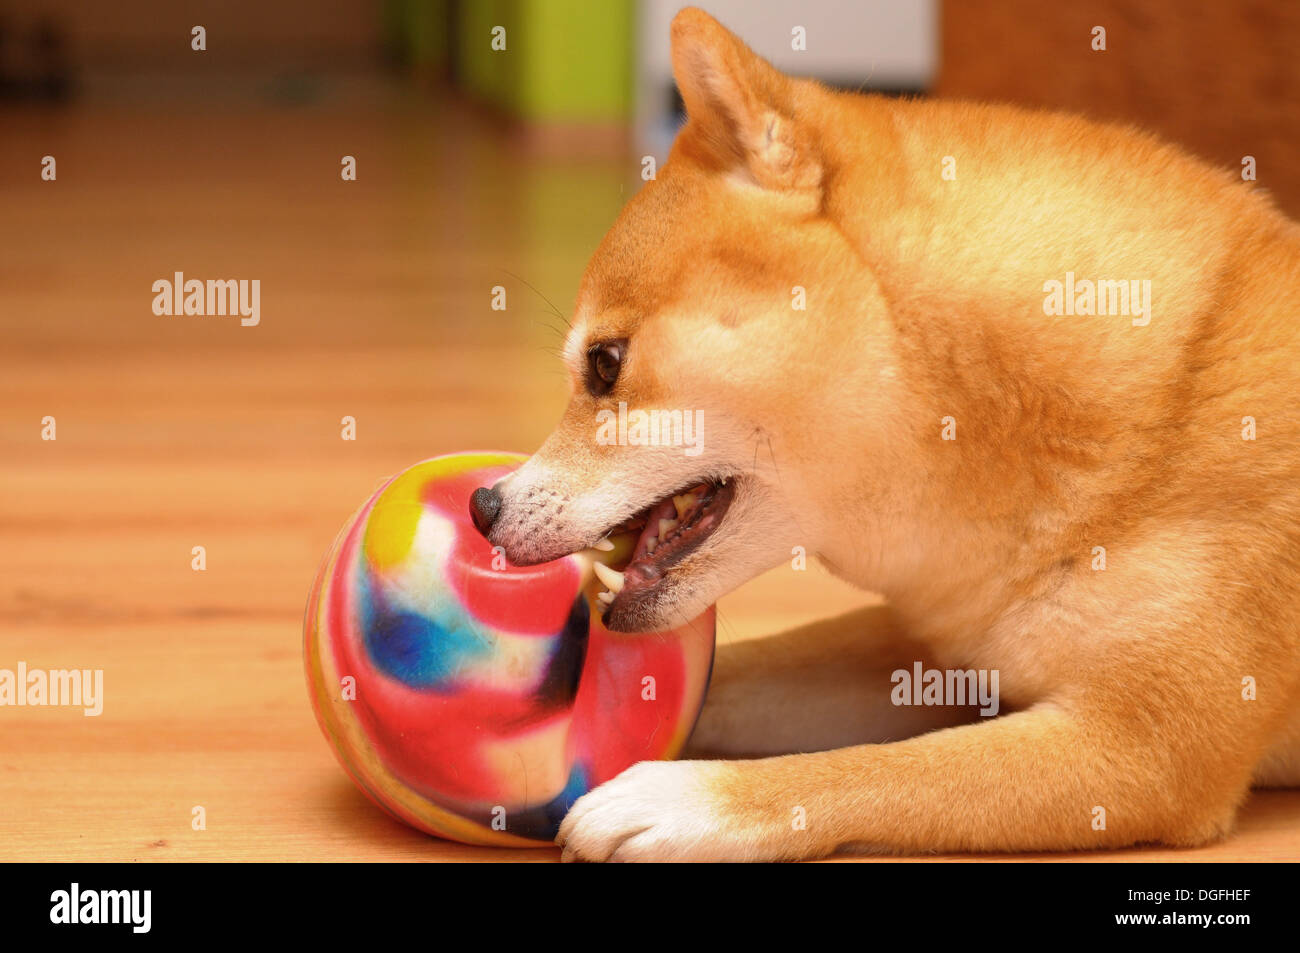 Shiba inu dog destroing a ball toy Stock Photo